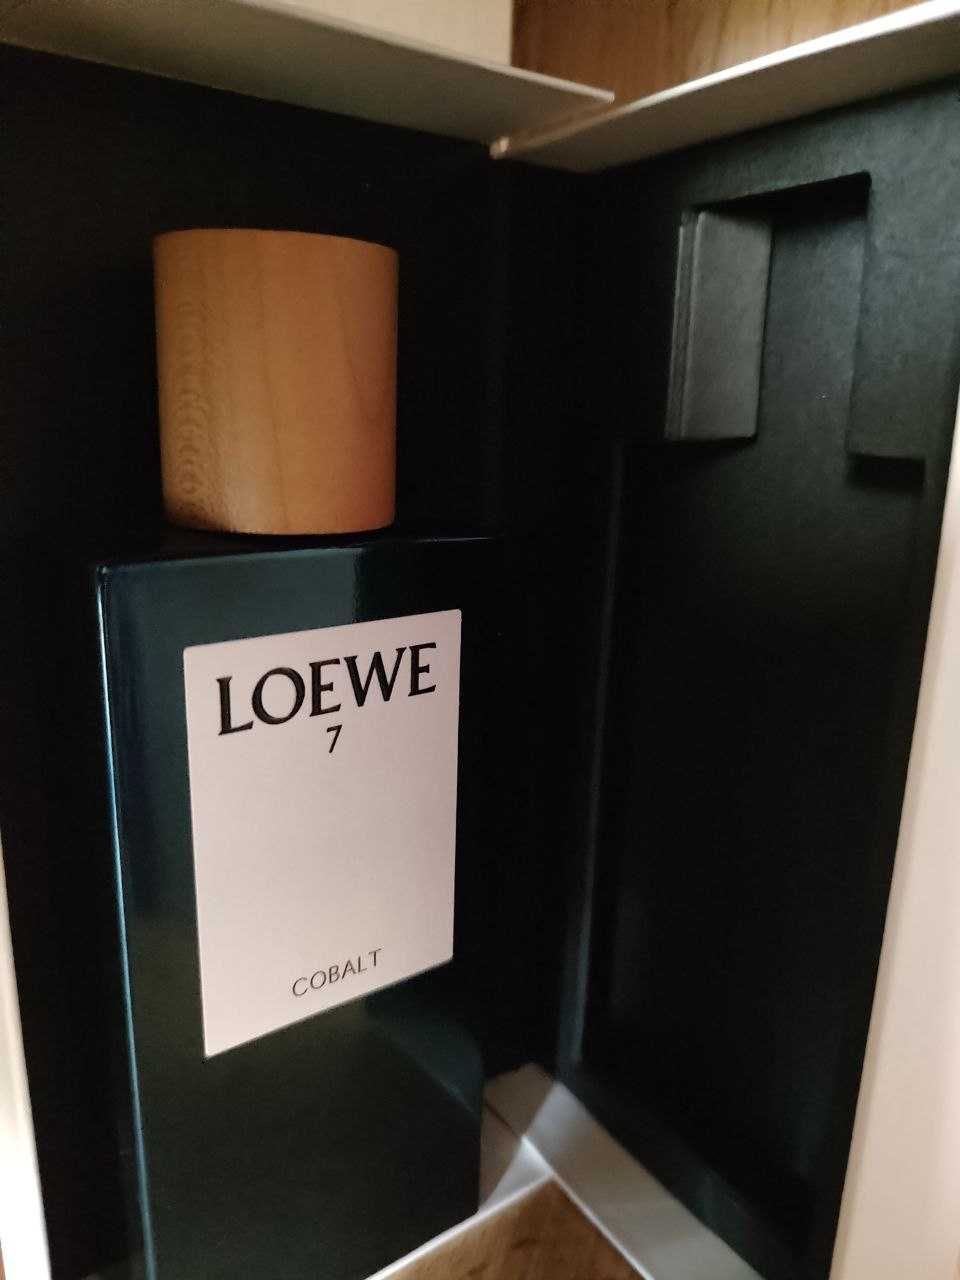 Loewe 7 Cobalt EDP 100 ml